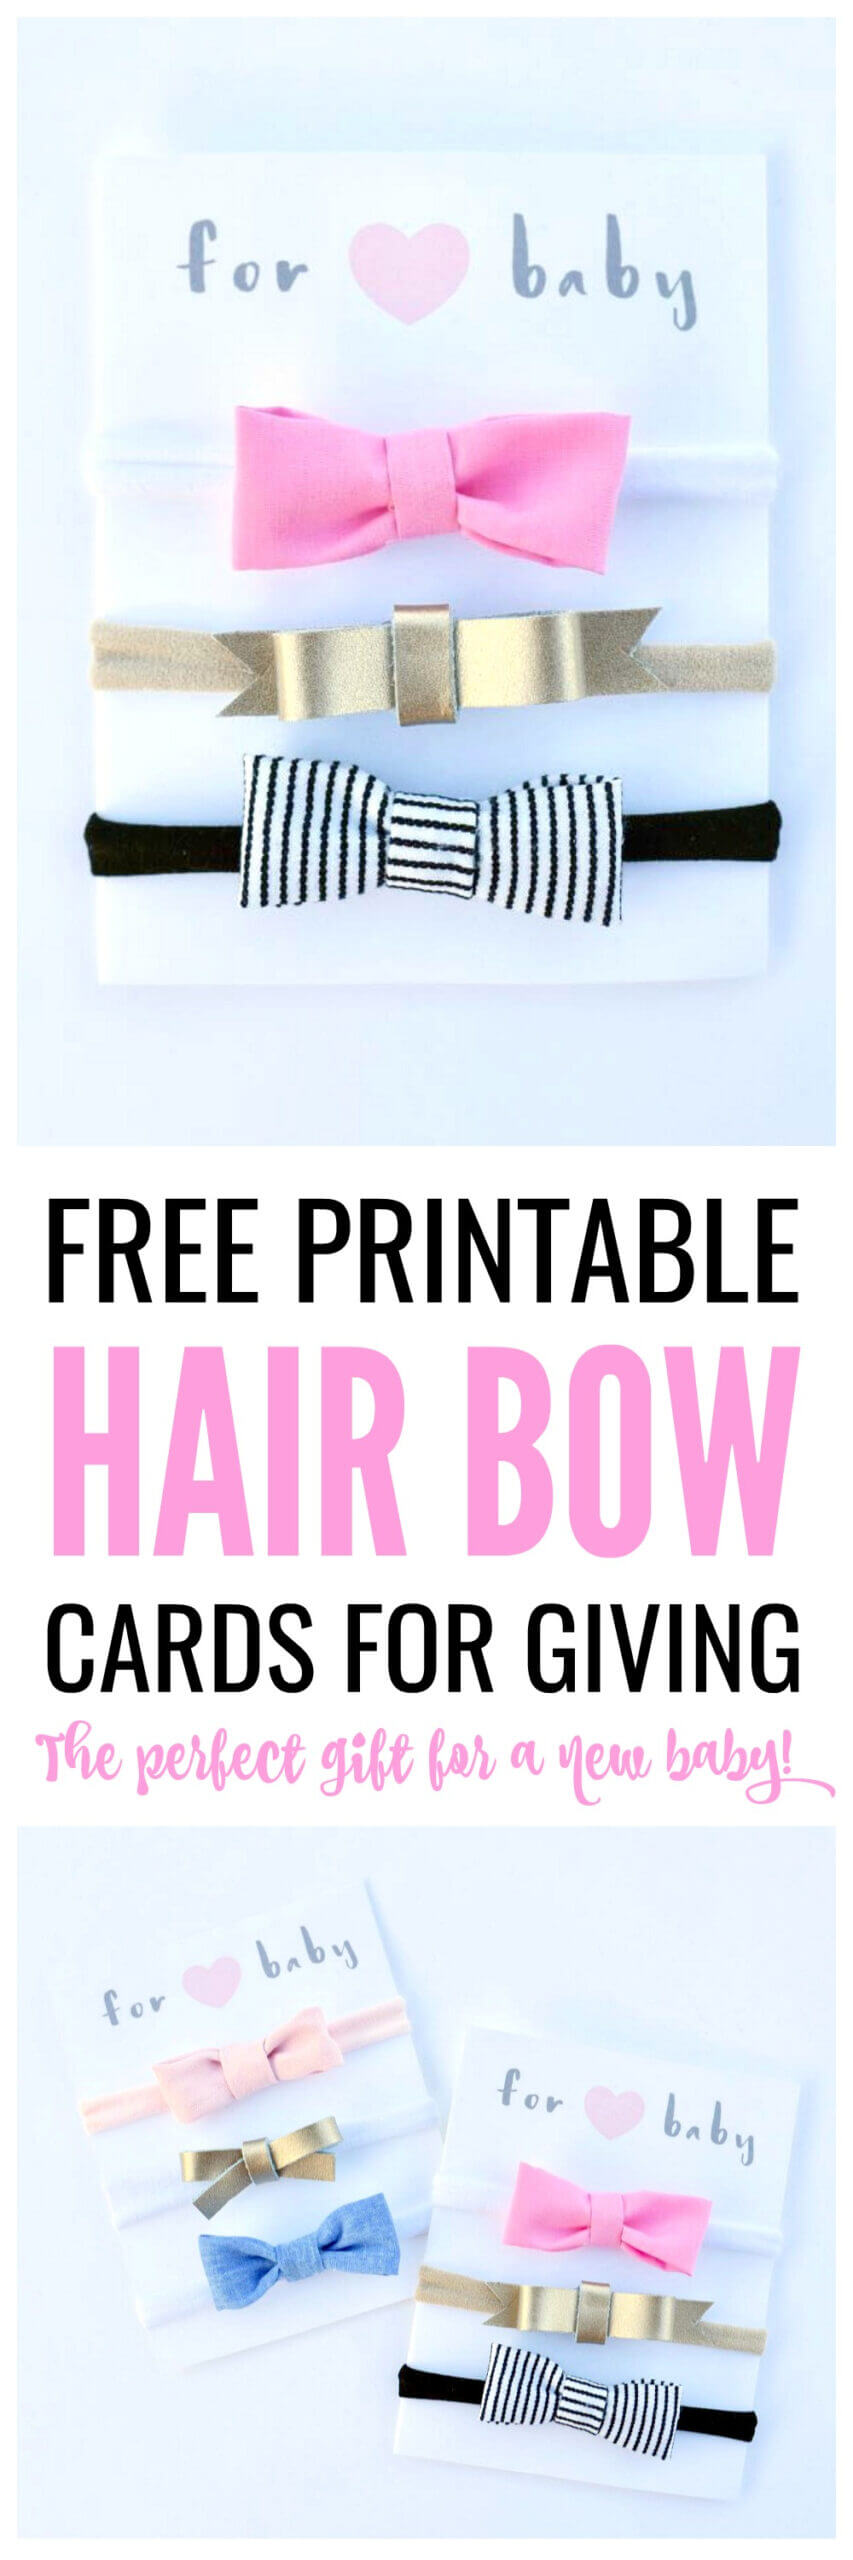 Free Printable Hair Bow Cards For Diy Hair Bows And Inside Headband Card Template